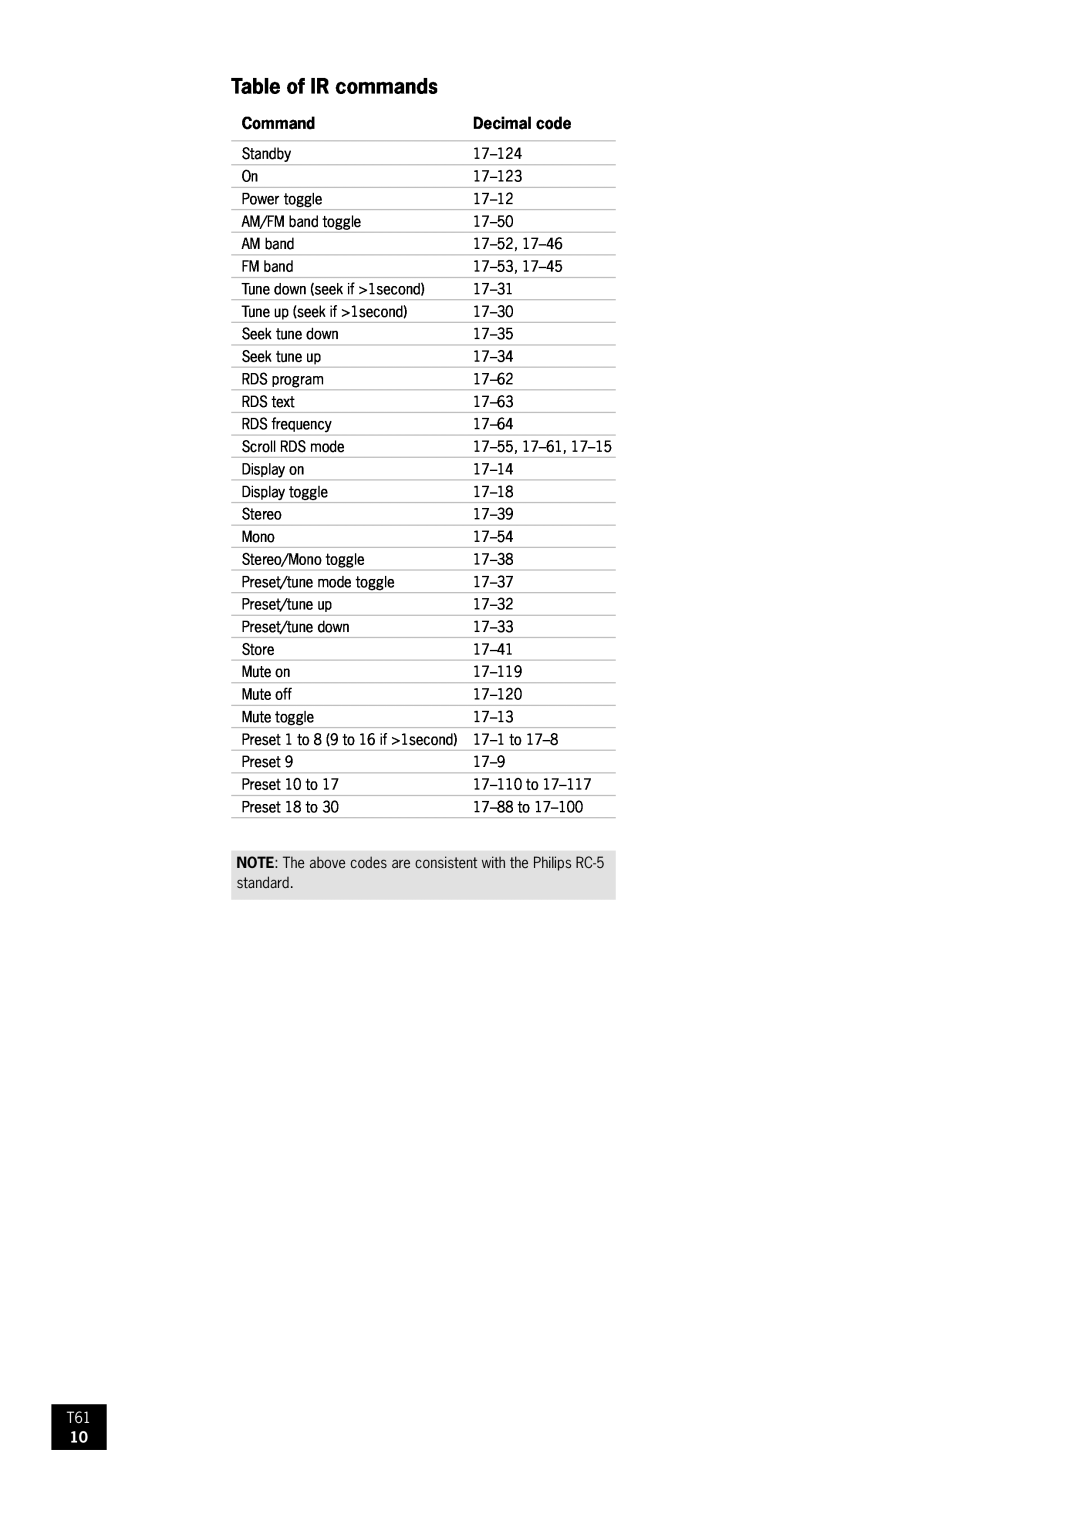 Arcam AM/FM Tuner T61 manual Table of IR commands, Command, Decimal code 